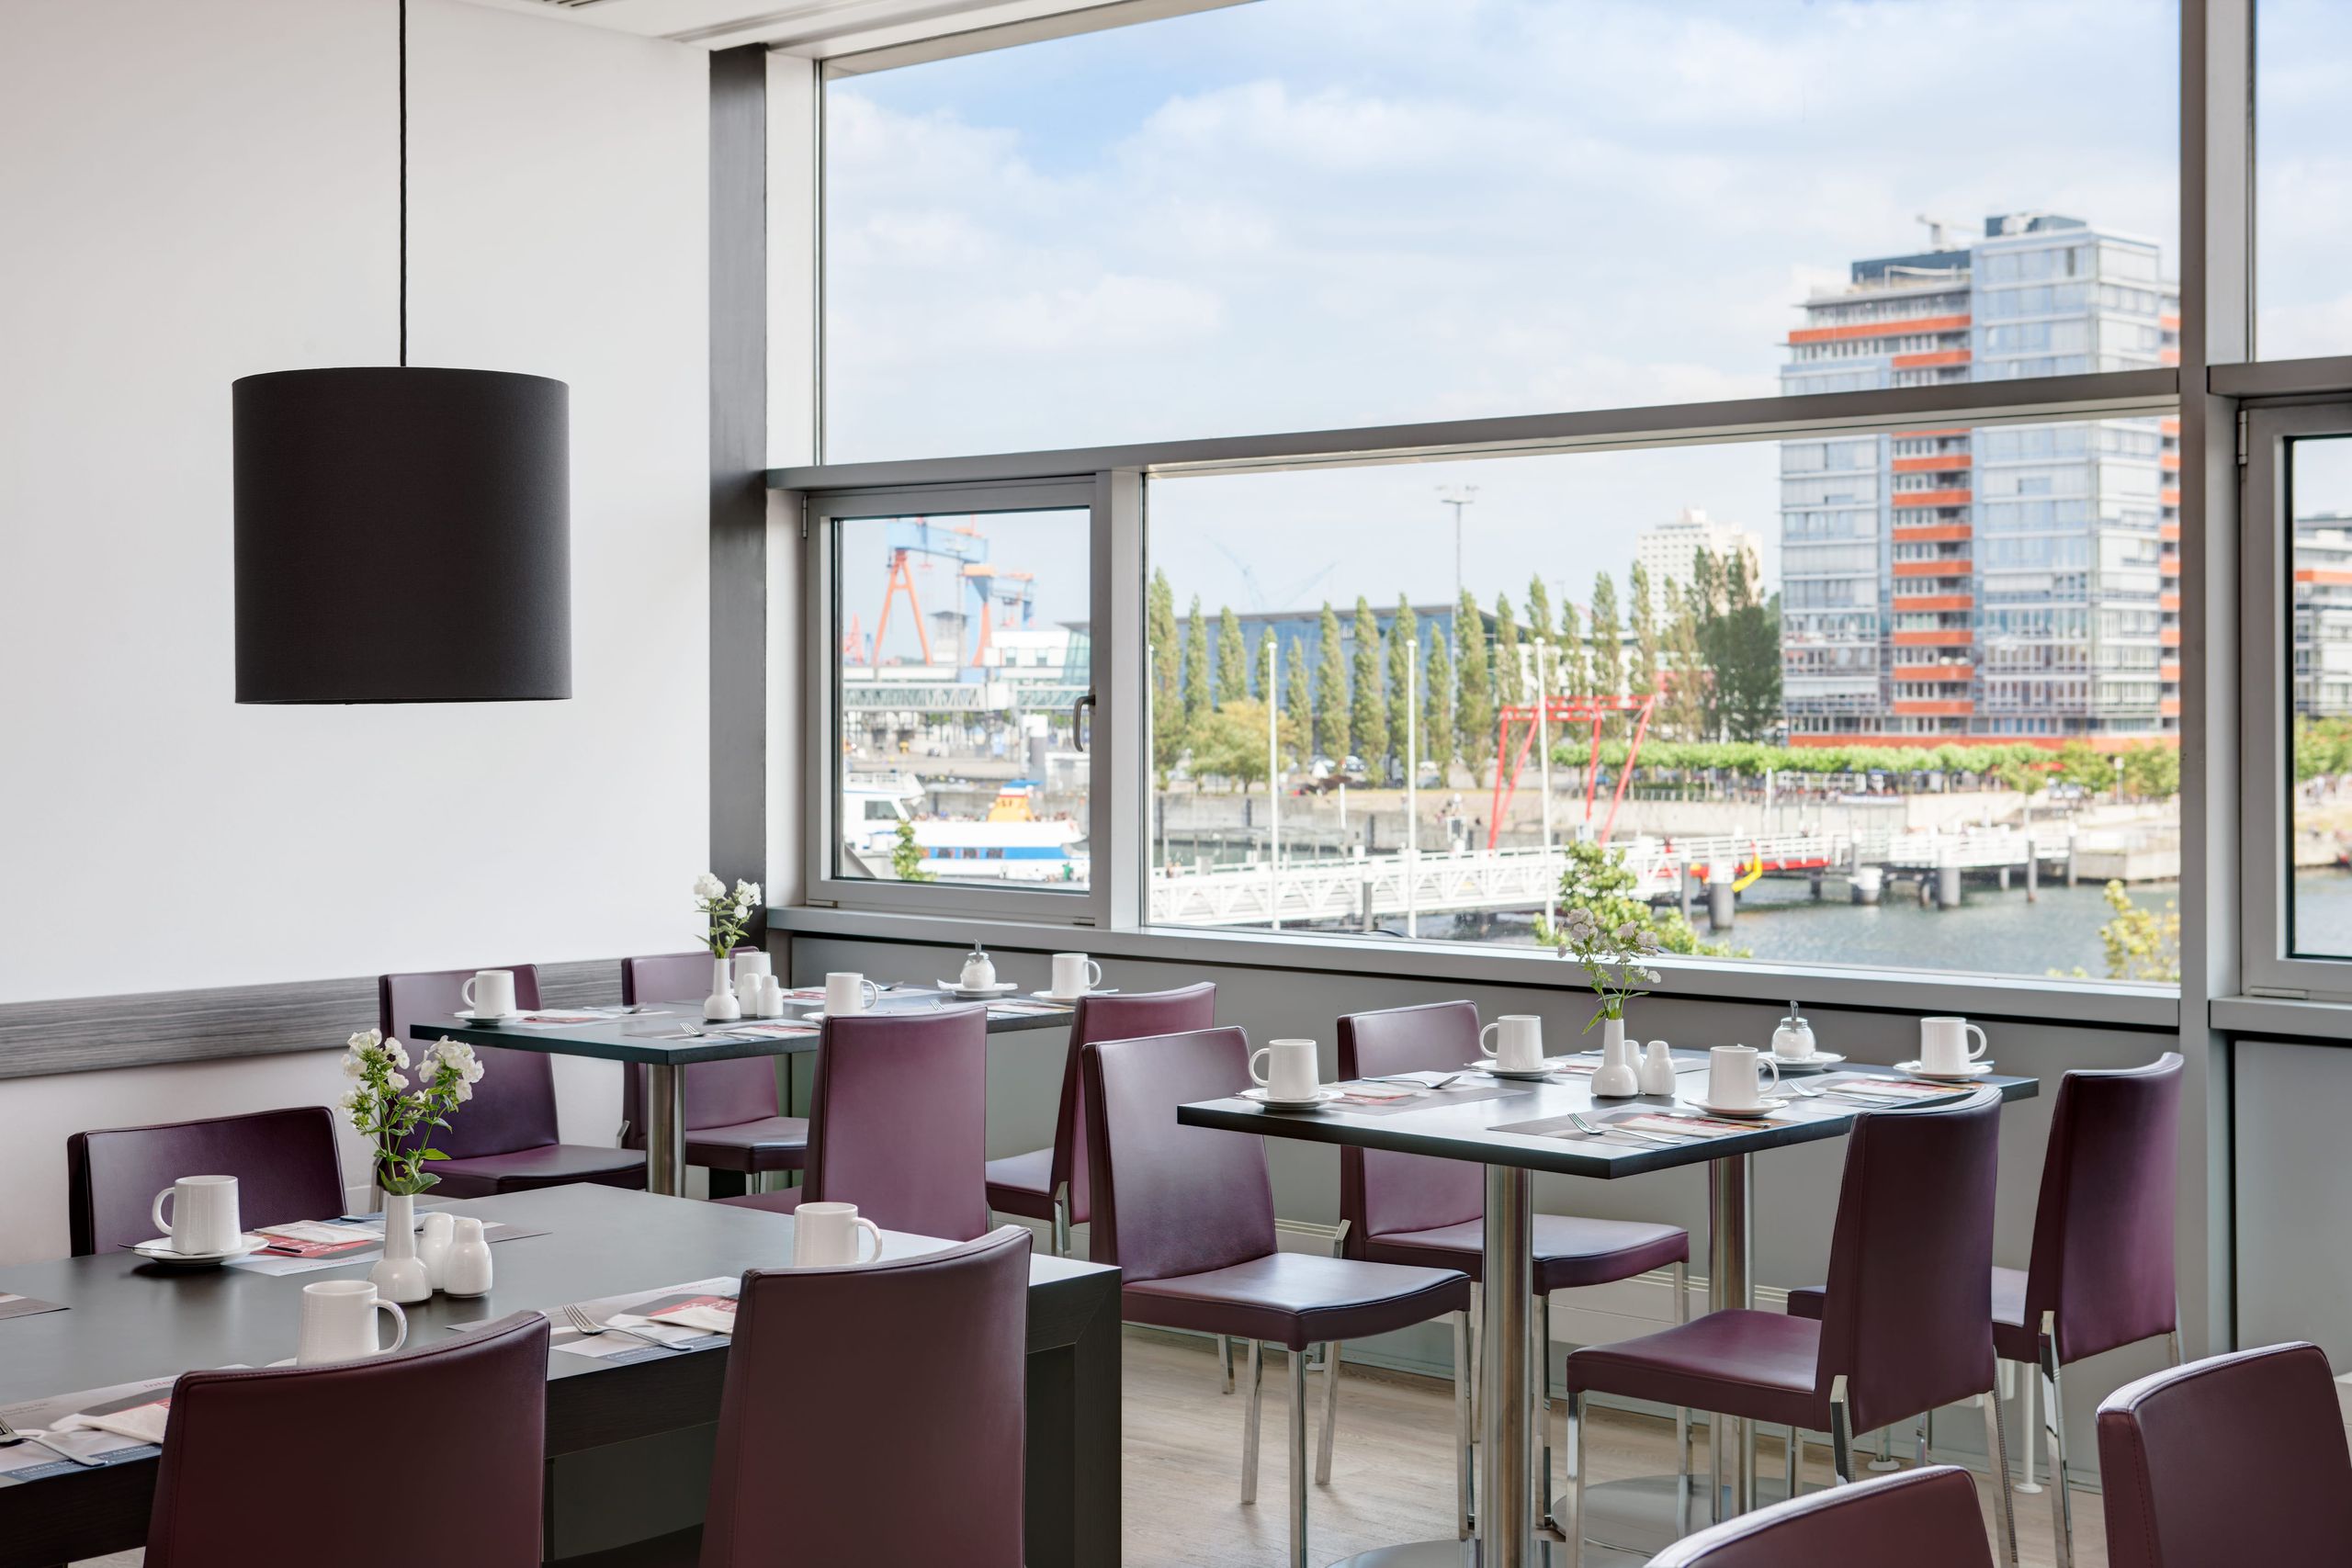 IntercityHotel Kiel – restaurant